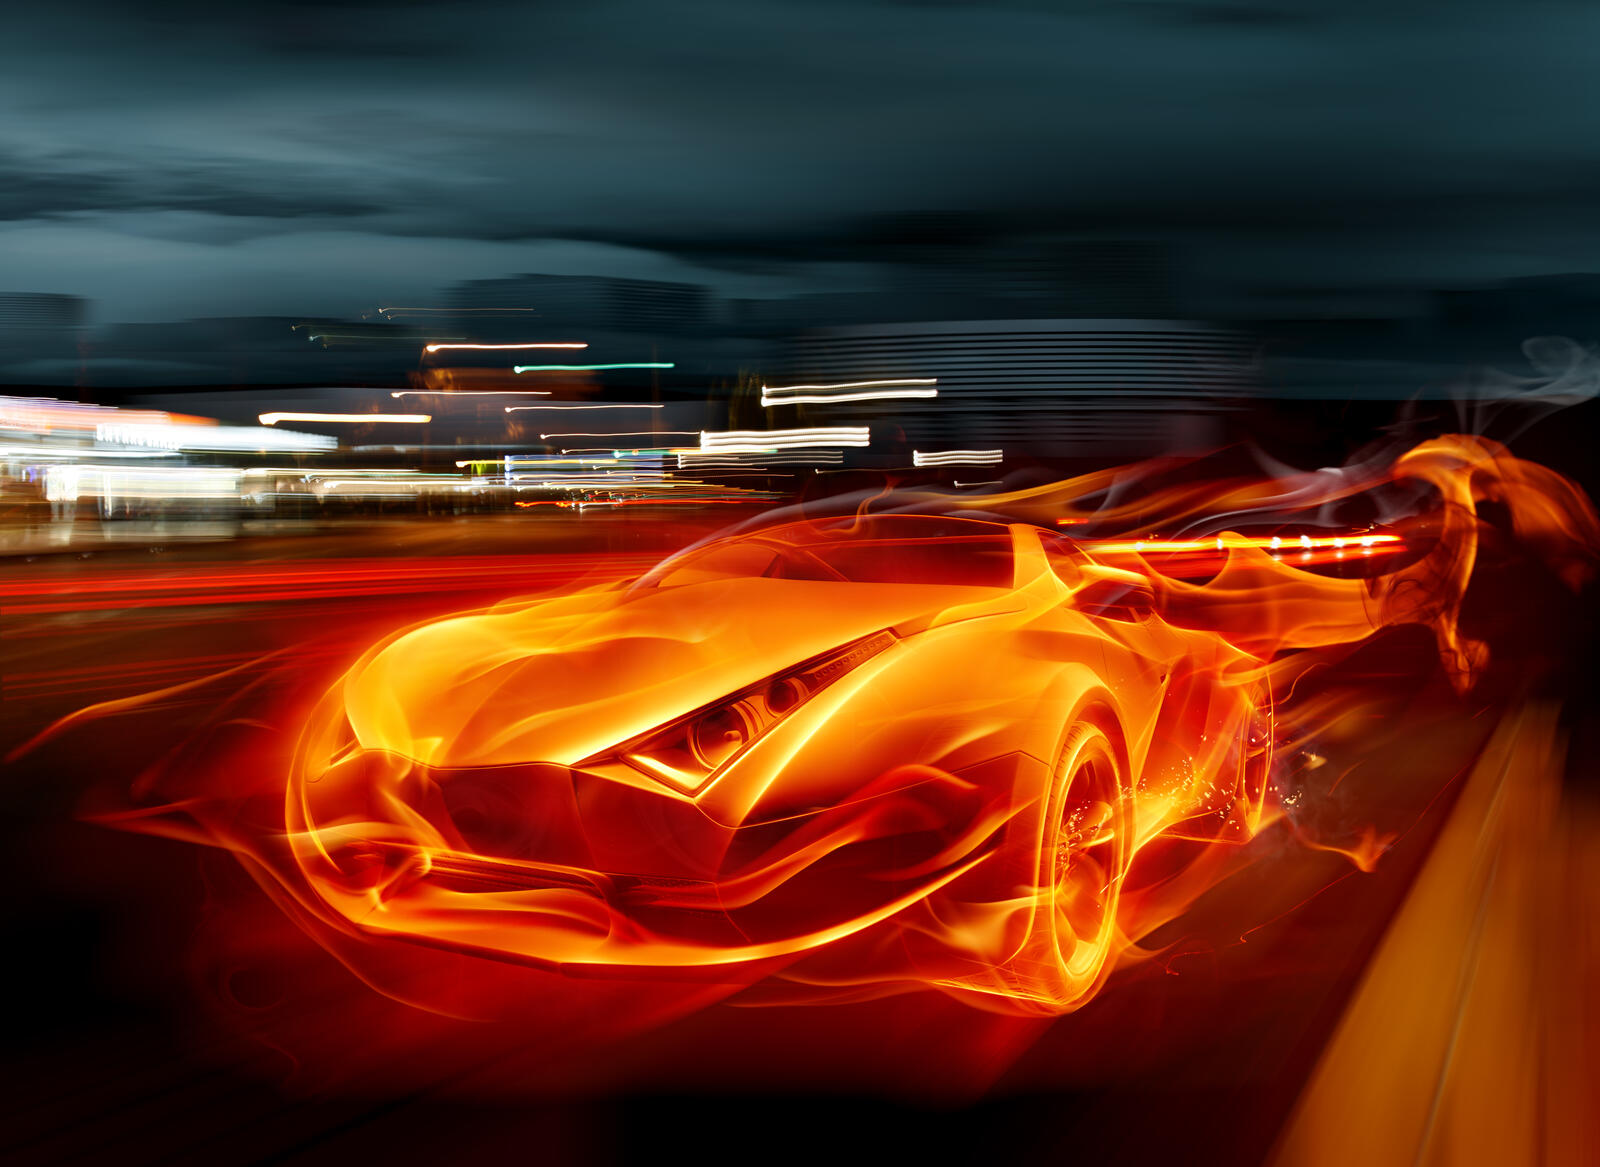 Wallpapers fire shape cars on the desktop